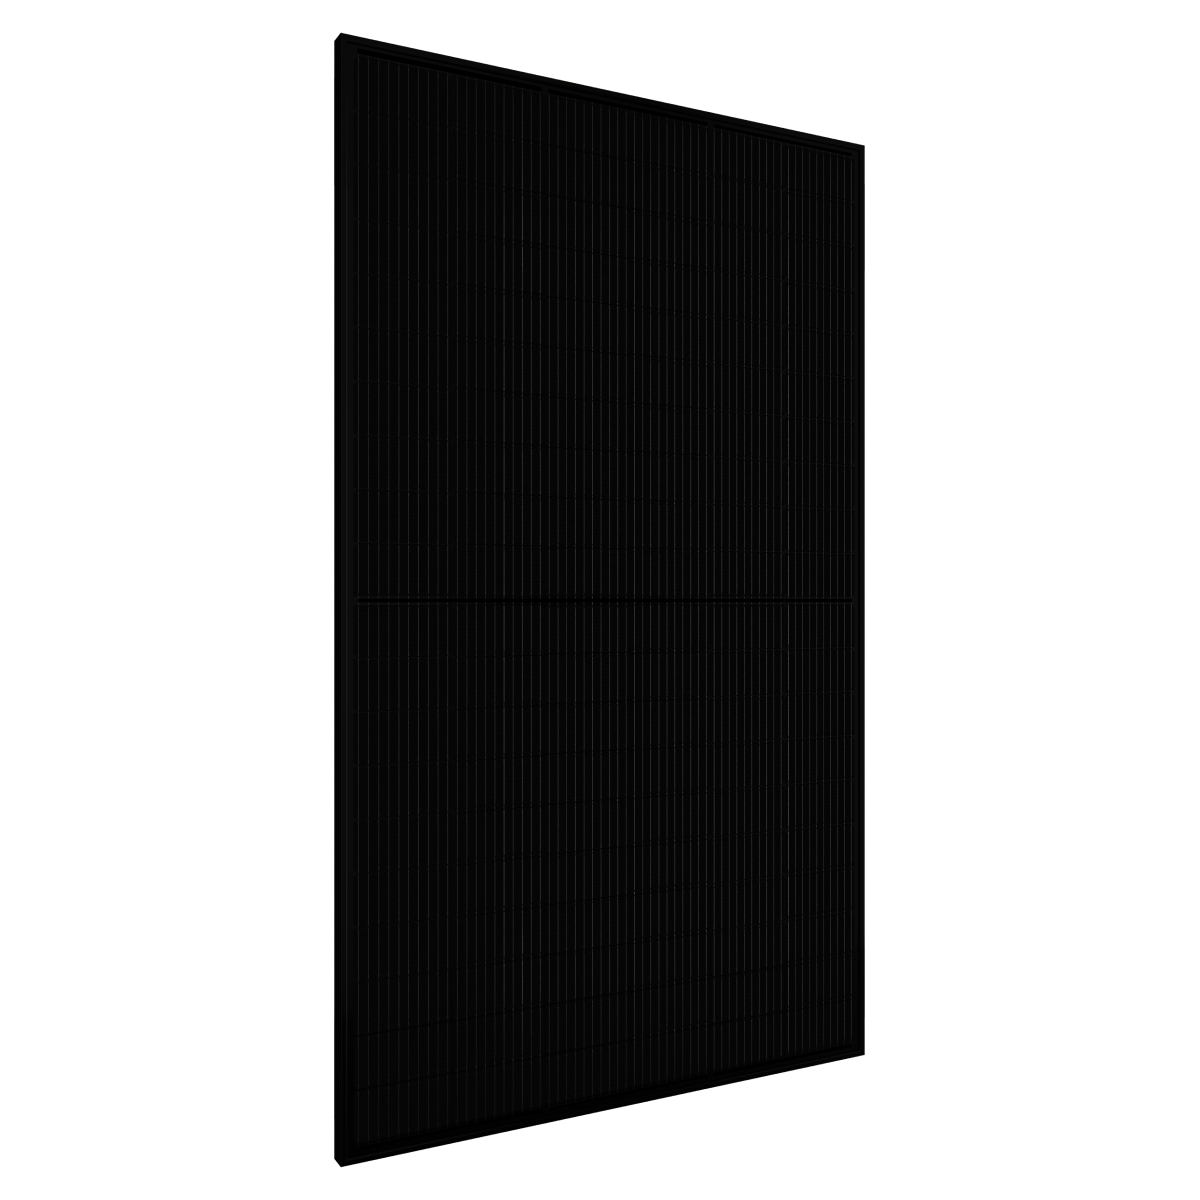 TommaTech 410Wp 108PM M10 Dark Series Solar Panel